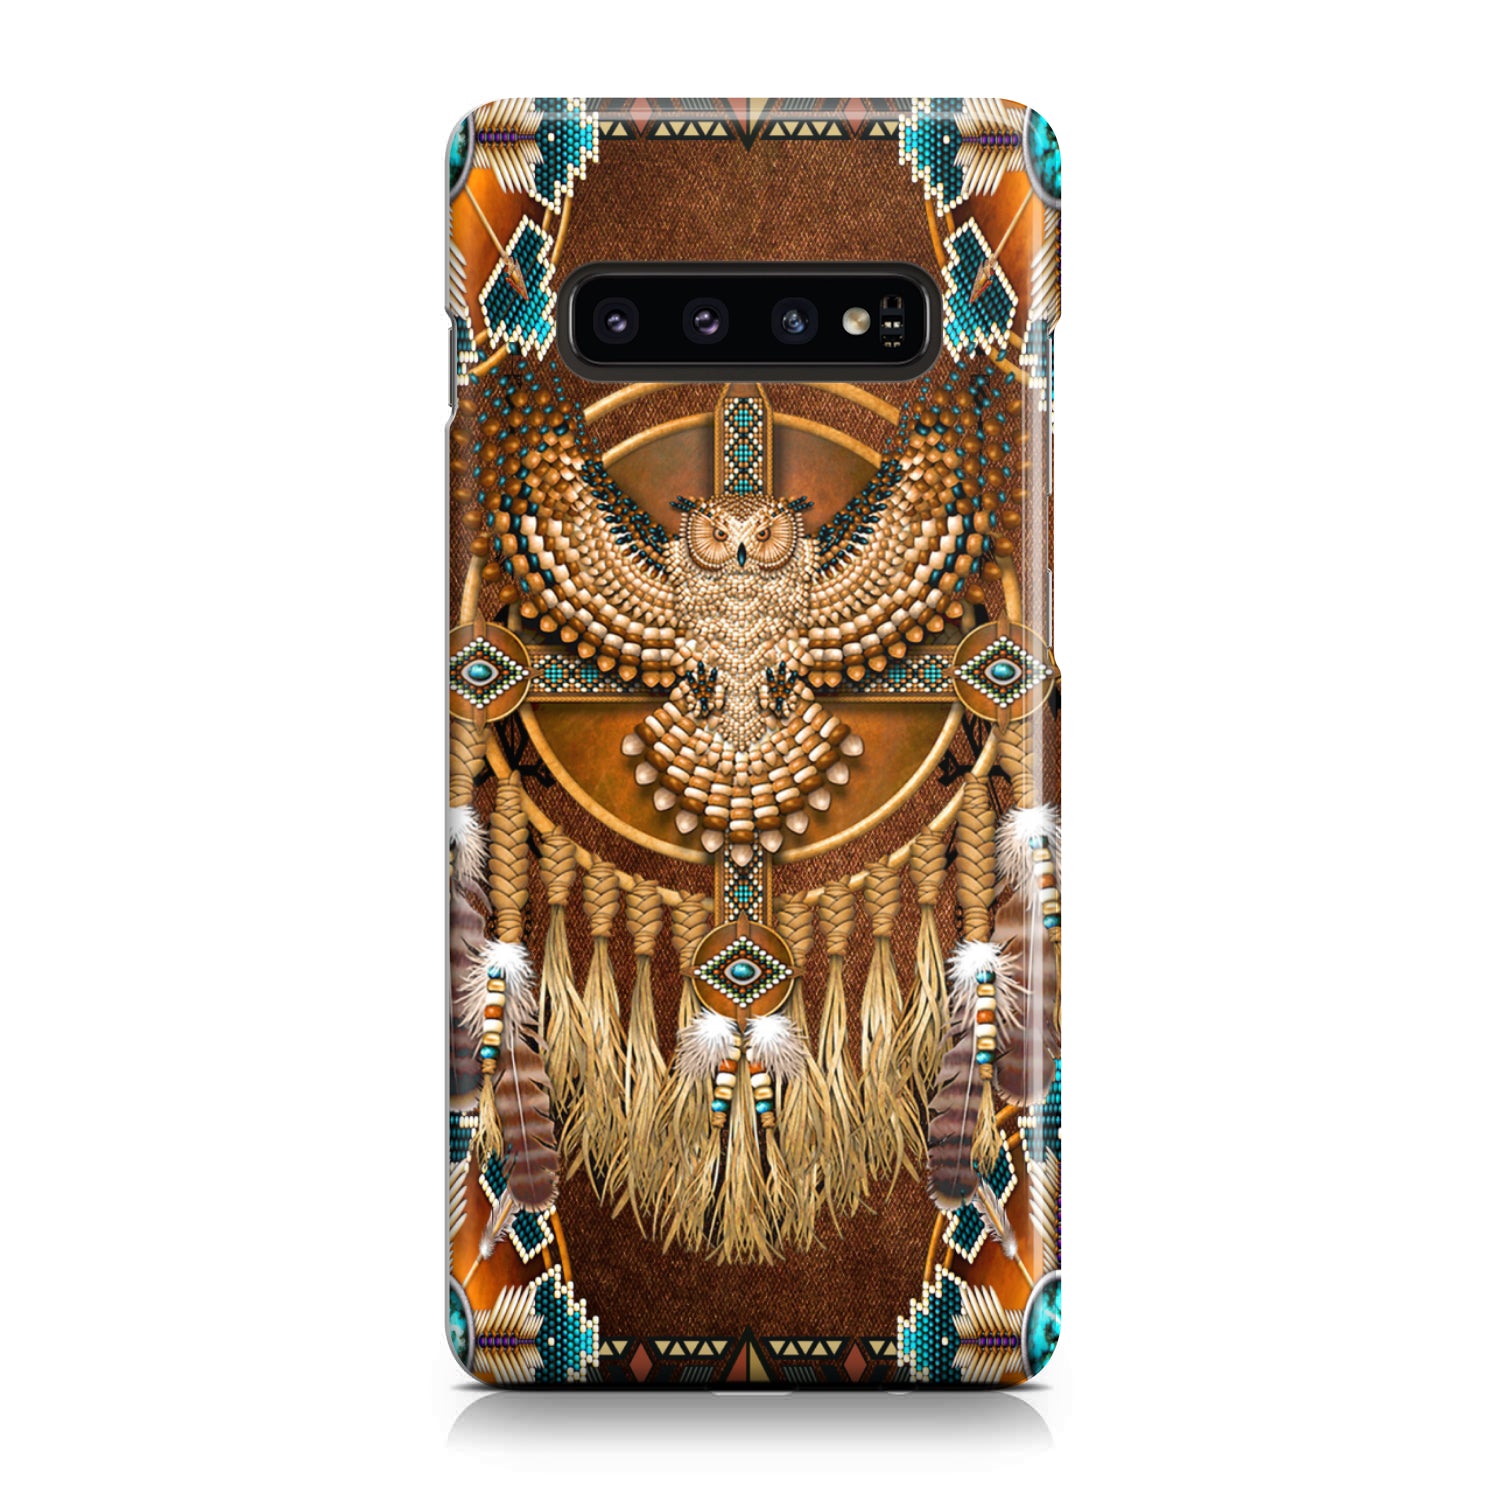 Powwow Storepc0023 mandala thunderbird phone case